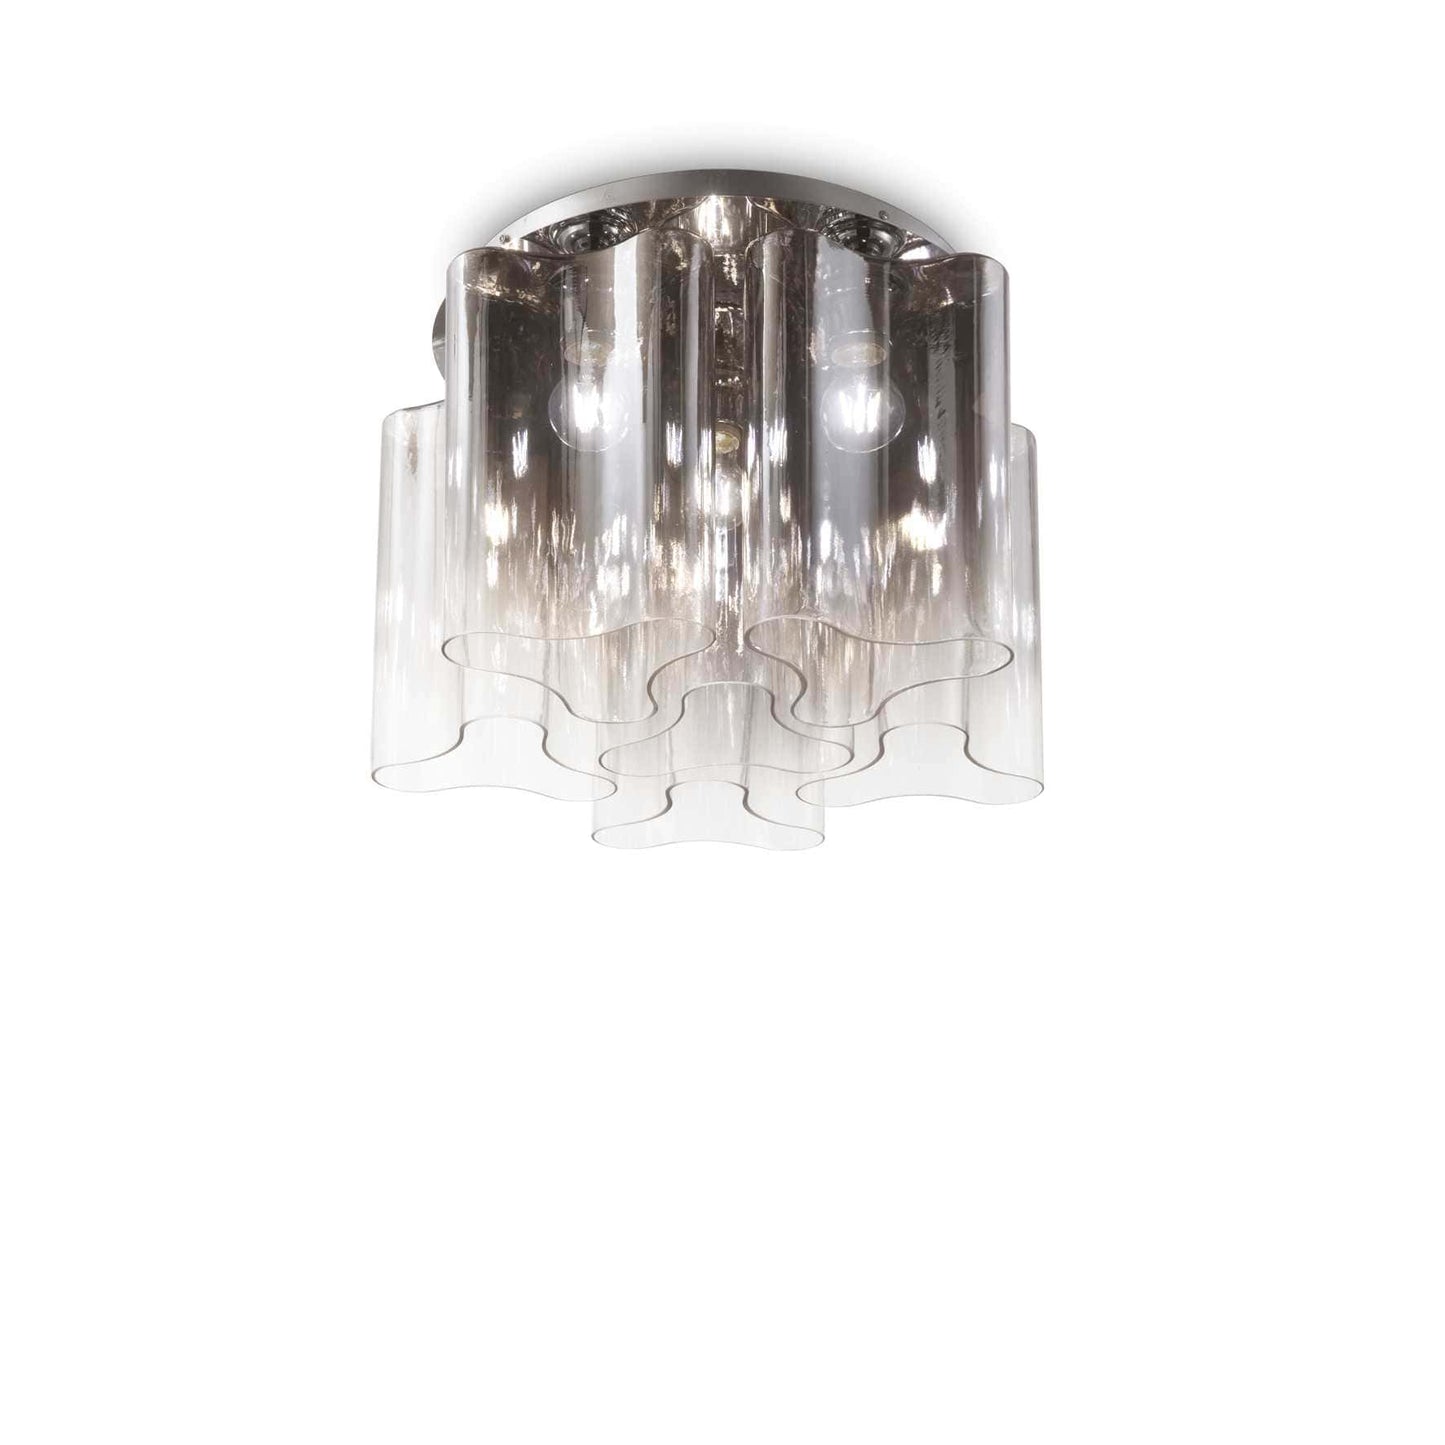 Ideal Lux Compo PL6 Ceiling Light